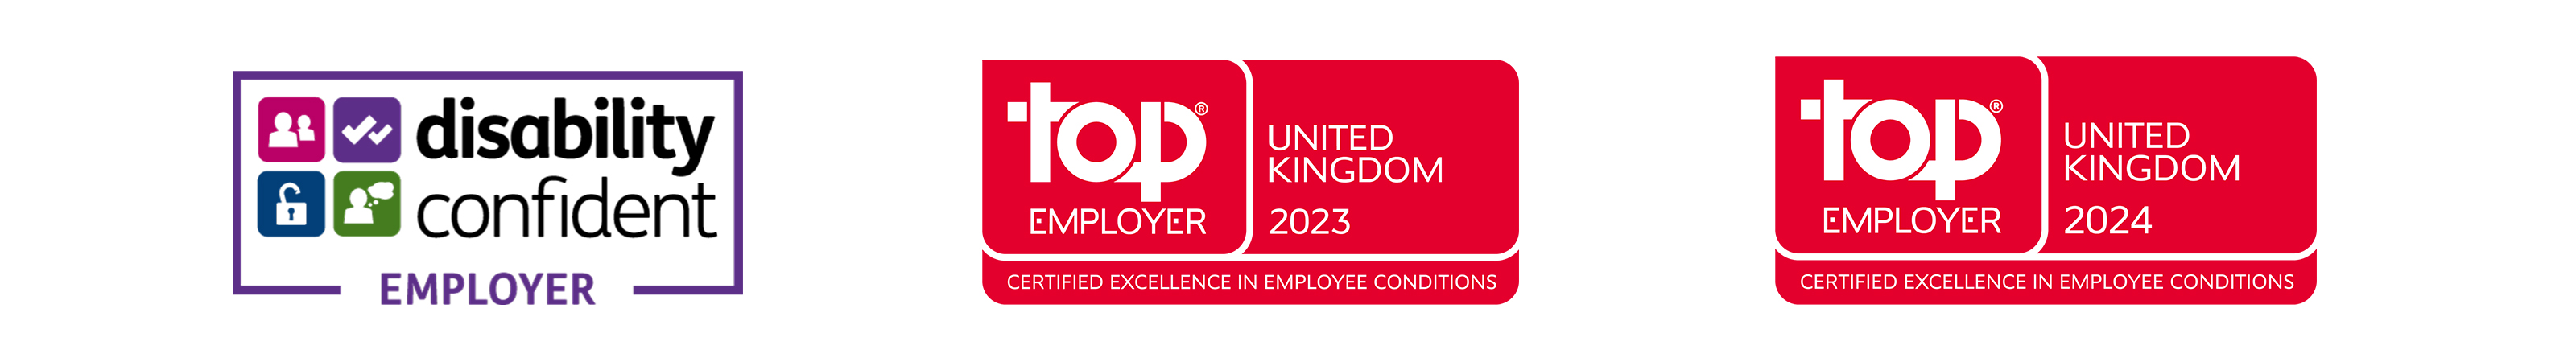 Disability confident employer, top employer 2023, top employer 2024 badges